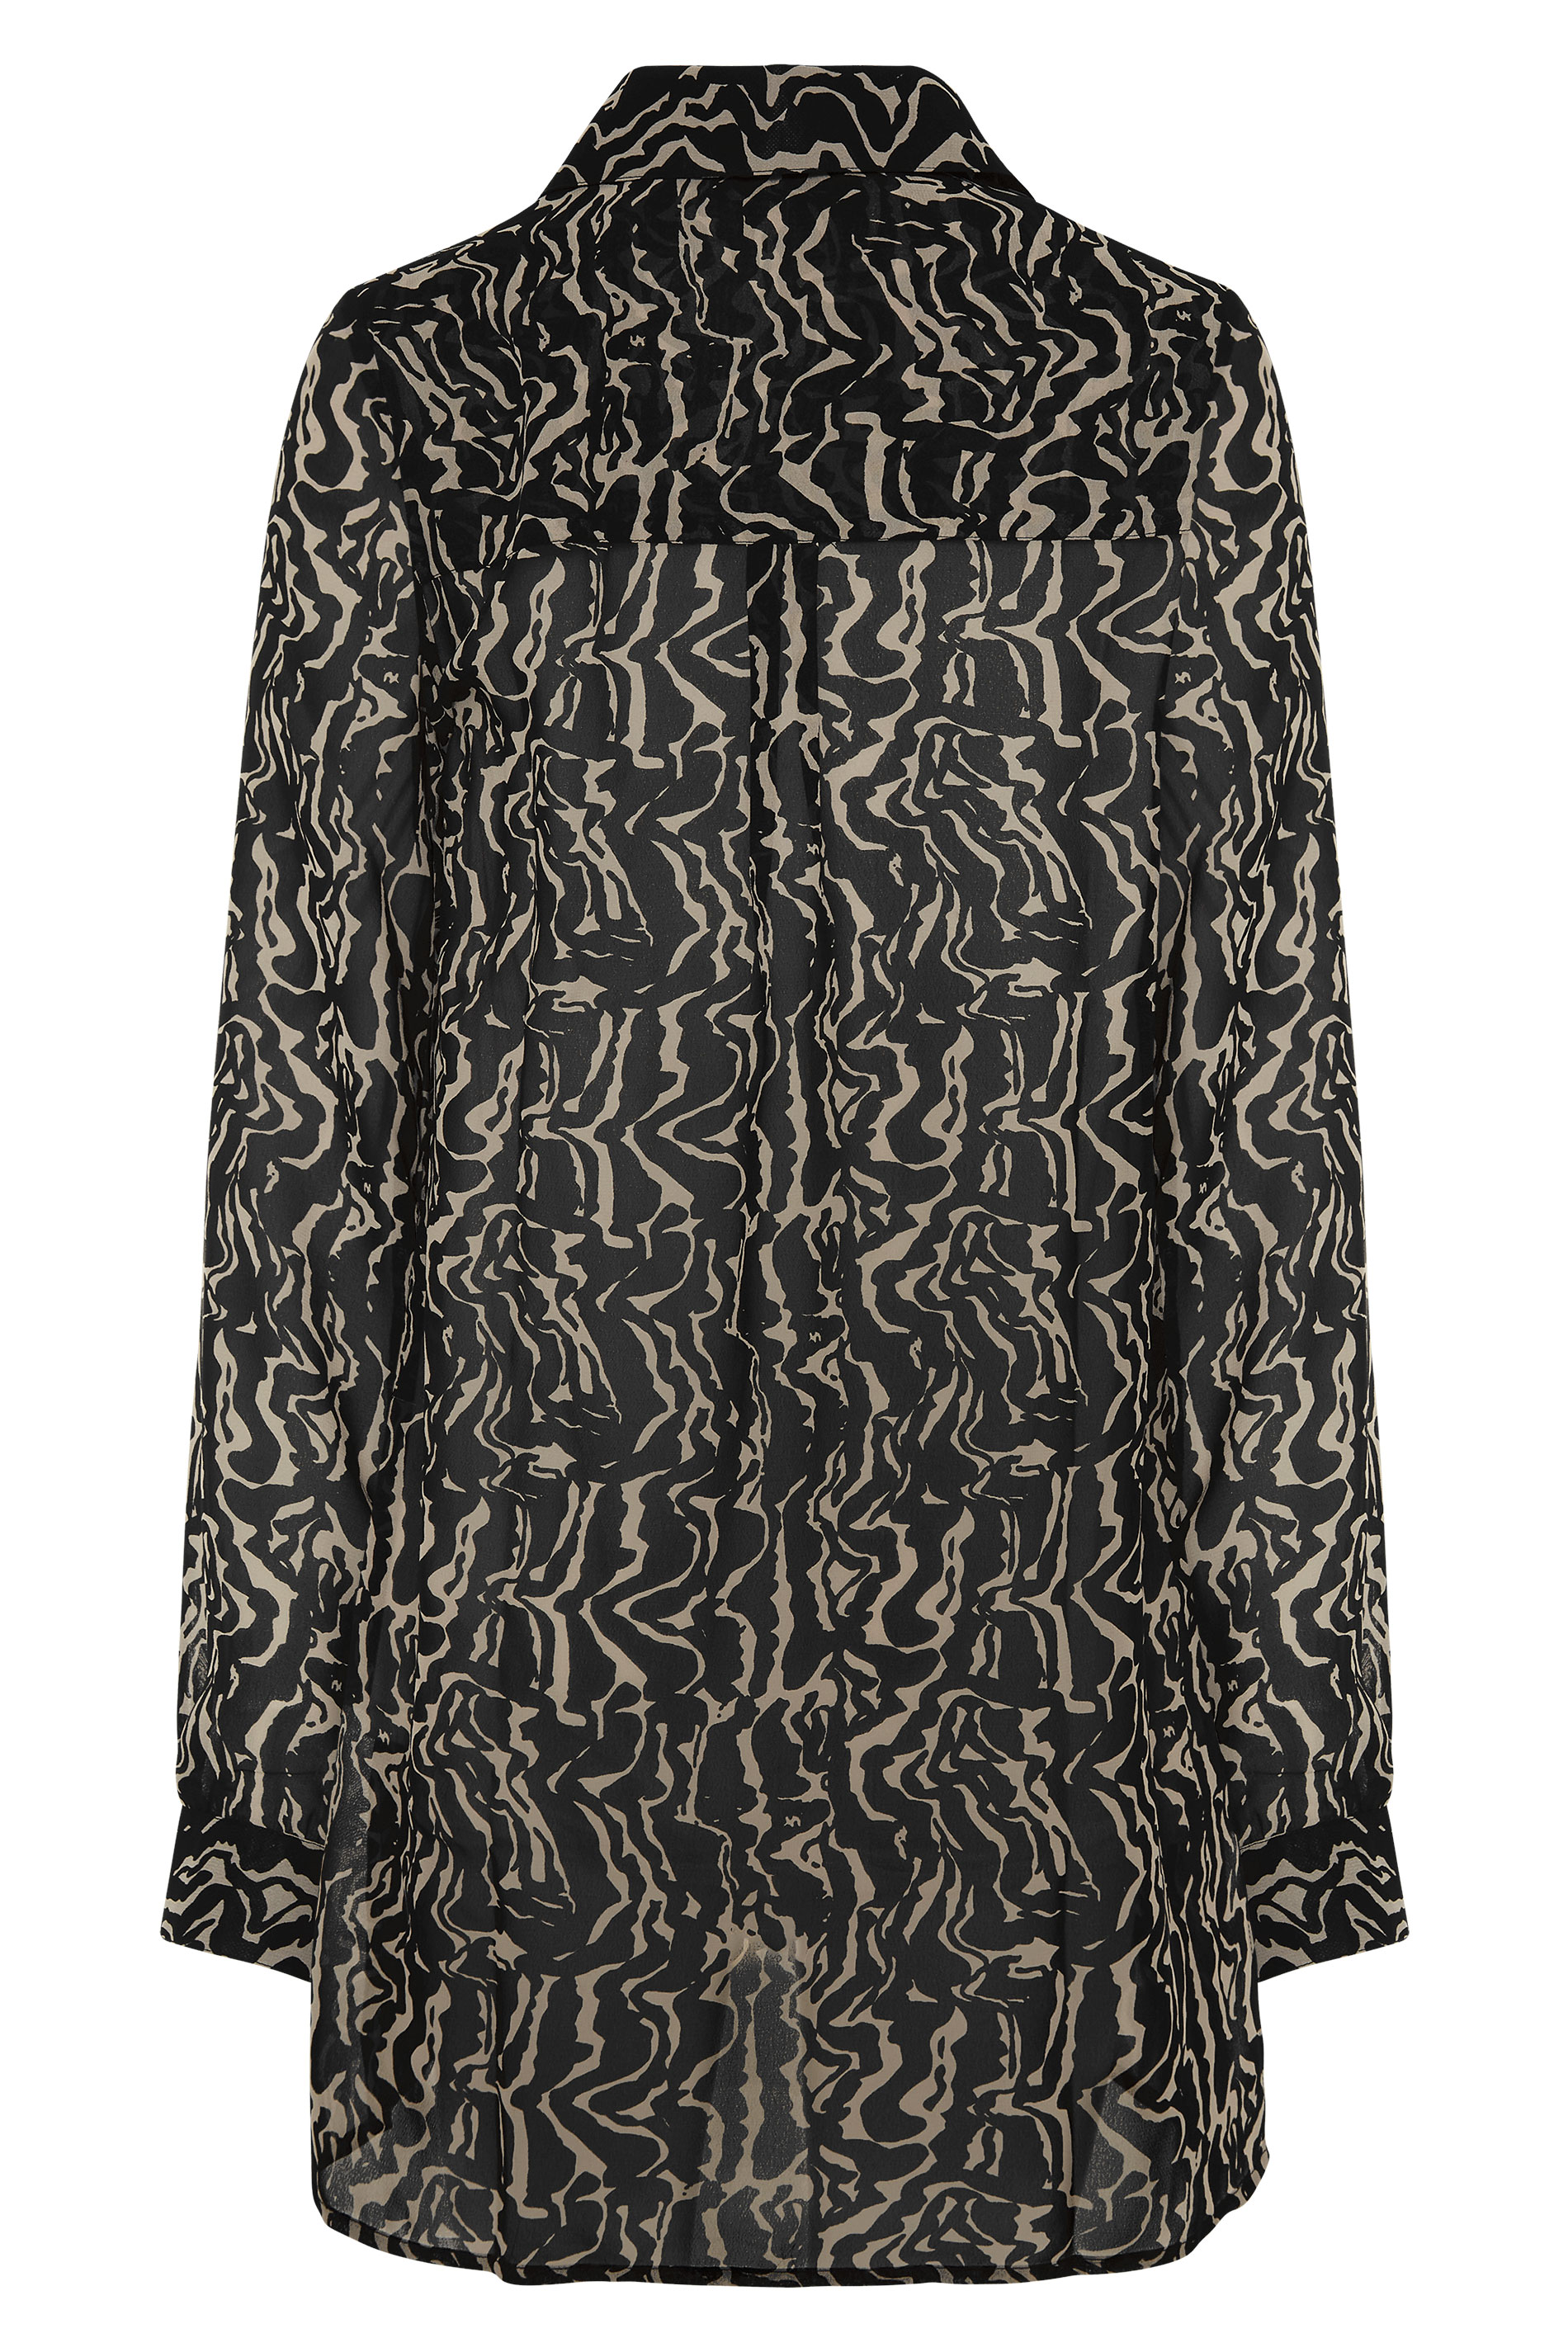 Tall Women's LTS Black Abstract Print Longline Shirt | Long Tall Sally